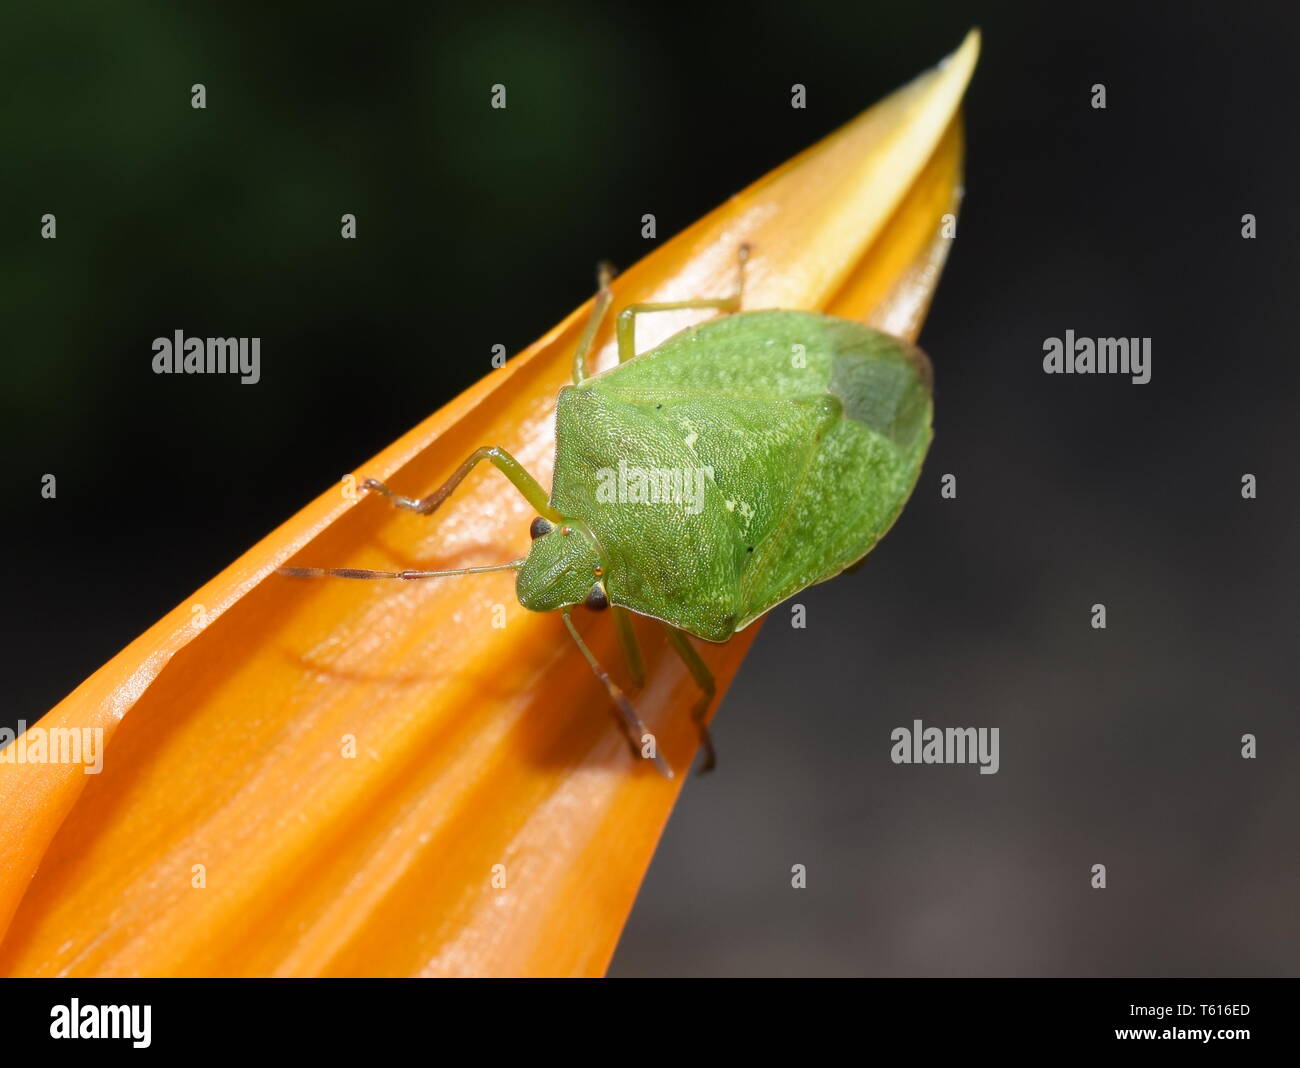 Southern green stink bug Nezara viridula on an orange flower Stock Photo